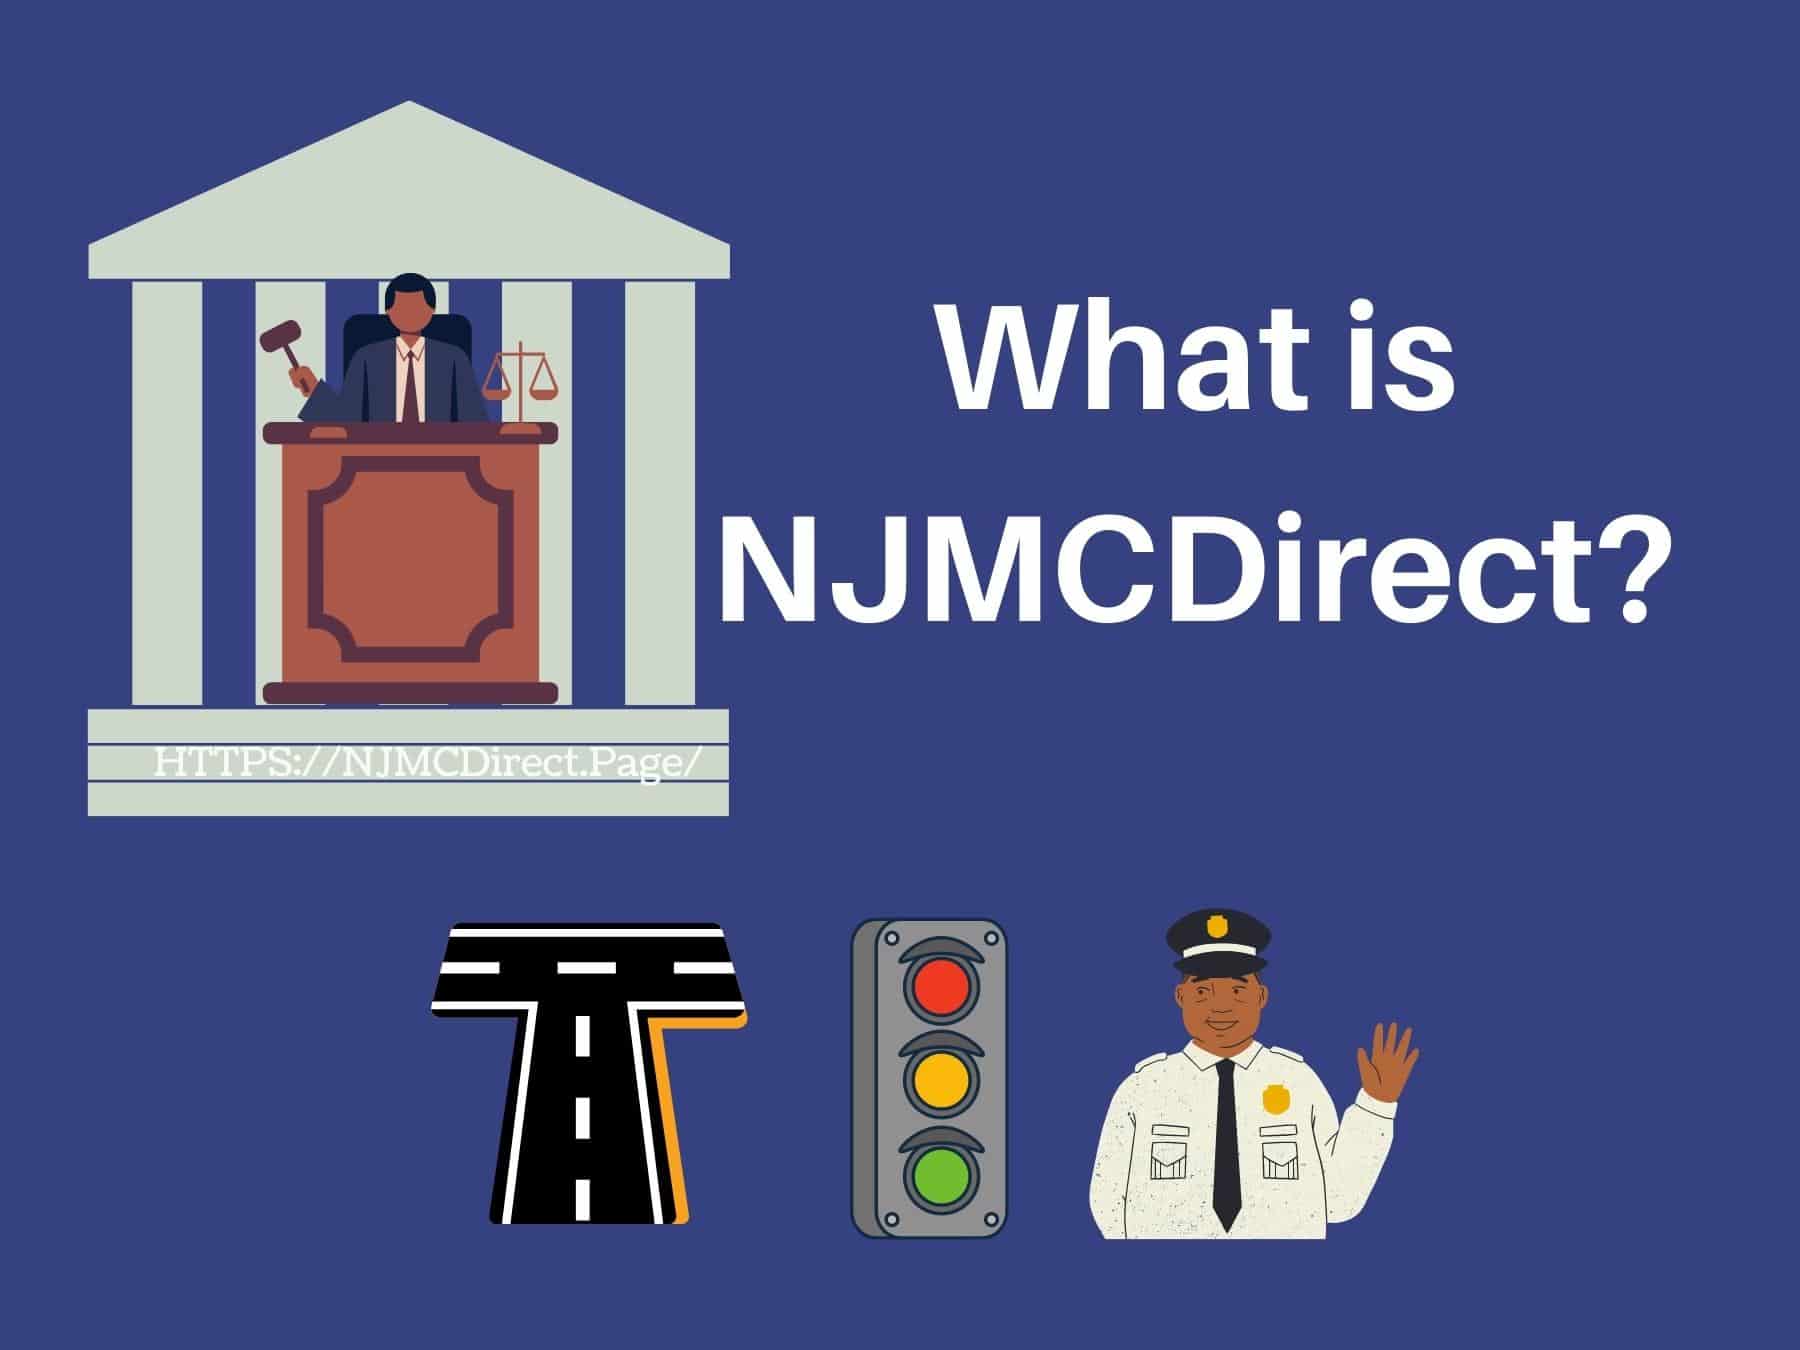 www.njmcdirect.com